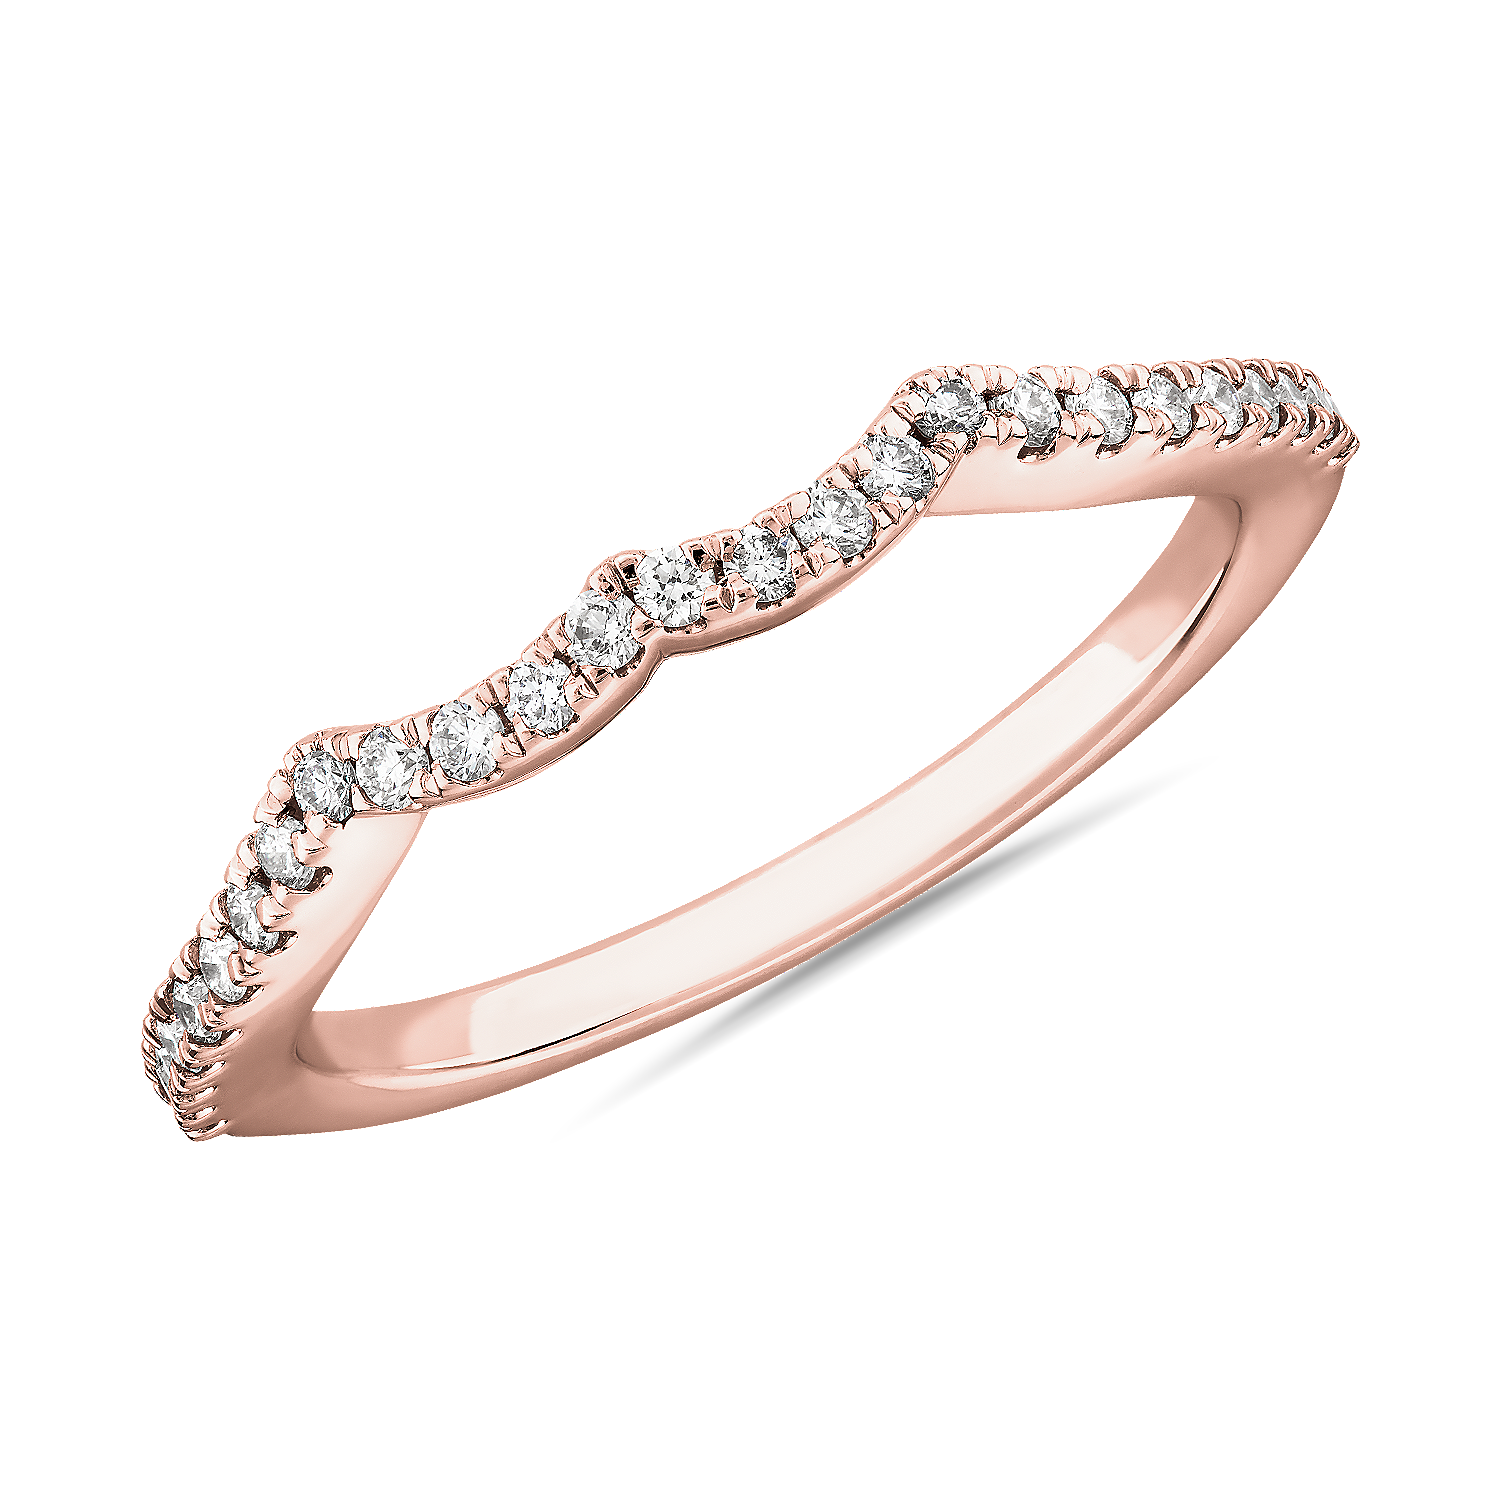 Double Twist Matching Diamond Wedding Ring in 14k Rose Gold (1/6 ct. tw.)